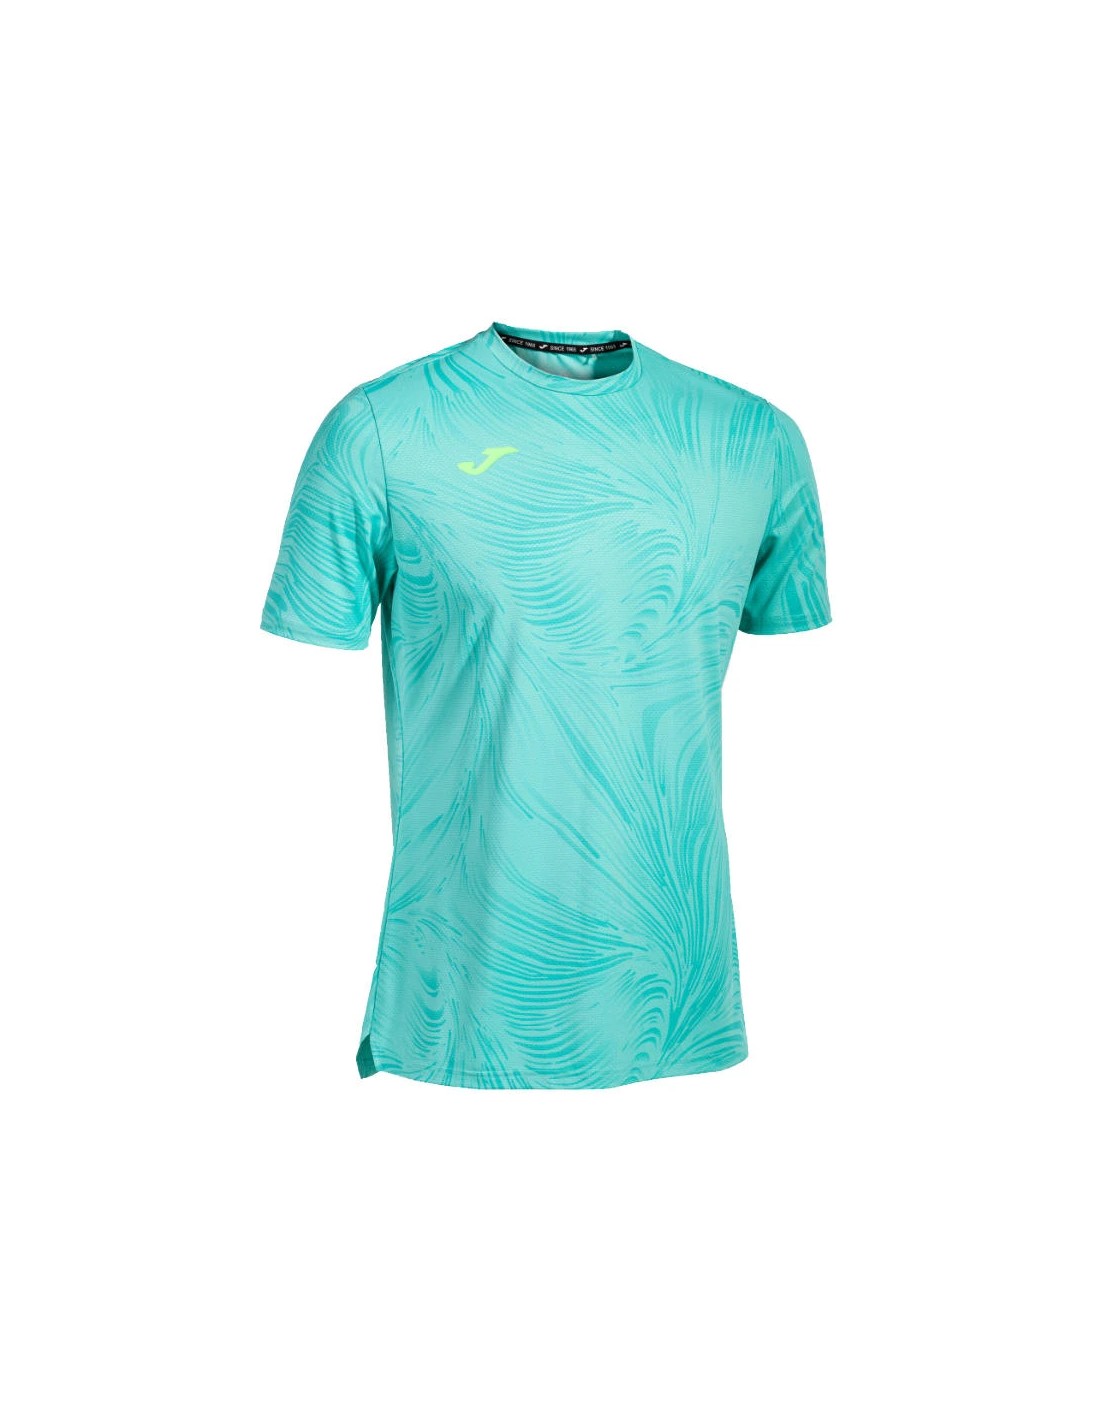 Camiseta Joma Challenge turquesa, elástica - Zona de Padel